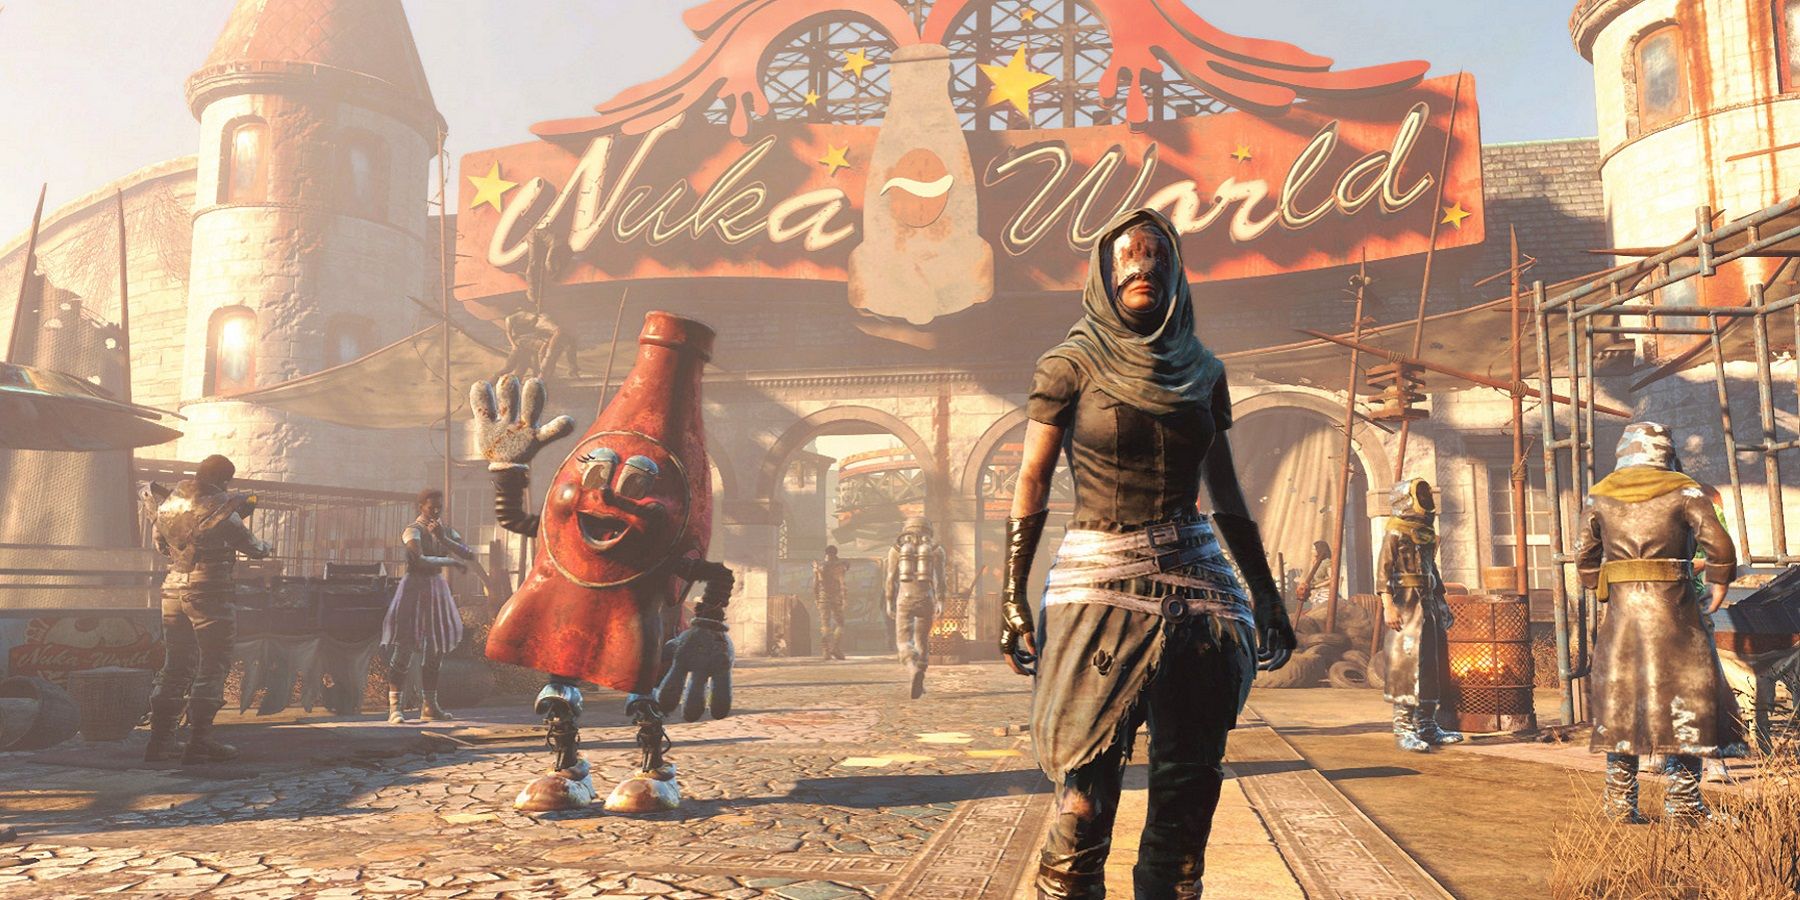 Image from Fallout 4 showing several NPCs stood outside Nuka World.